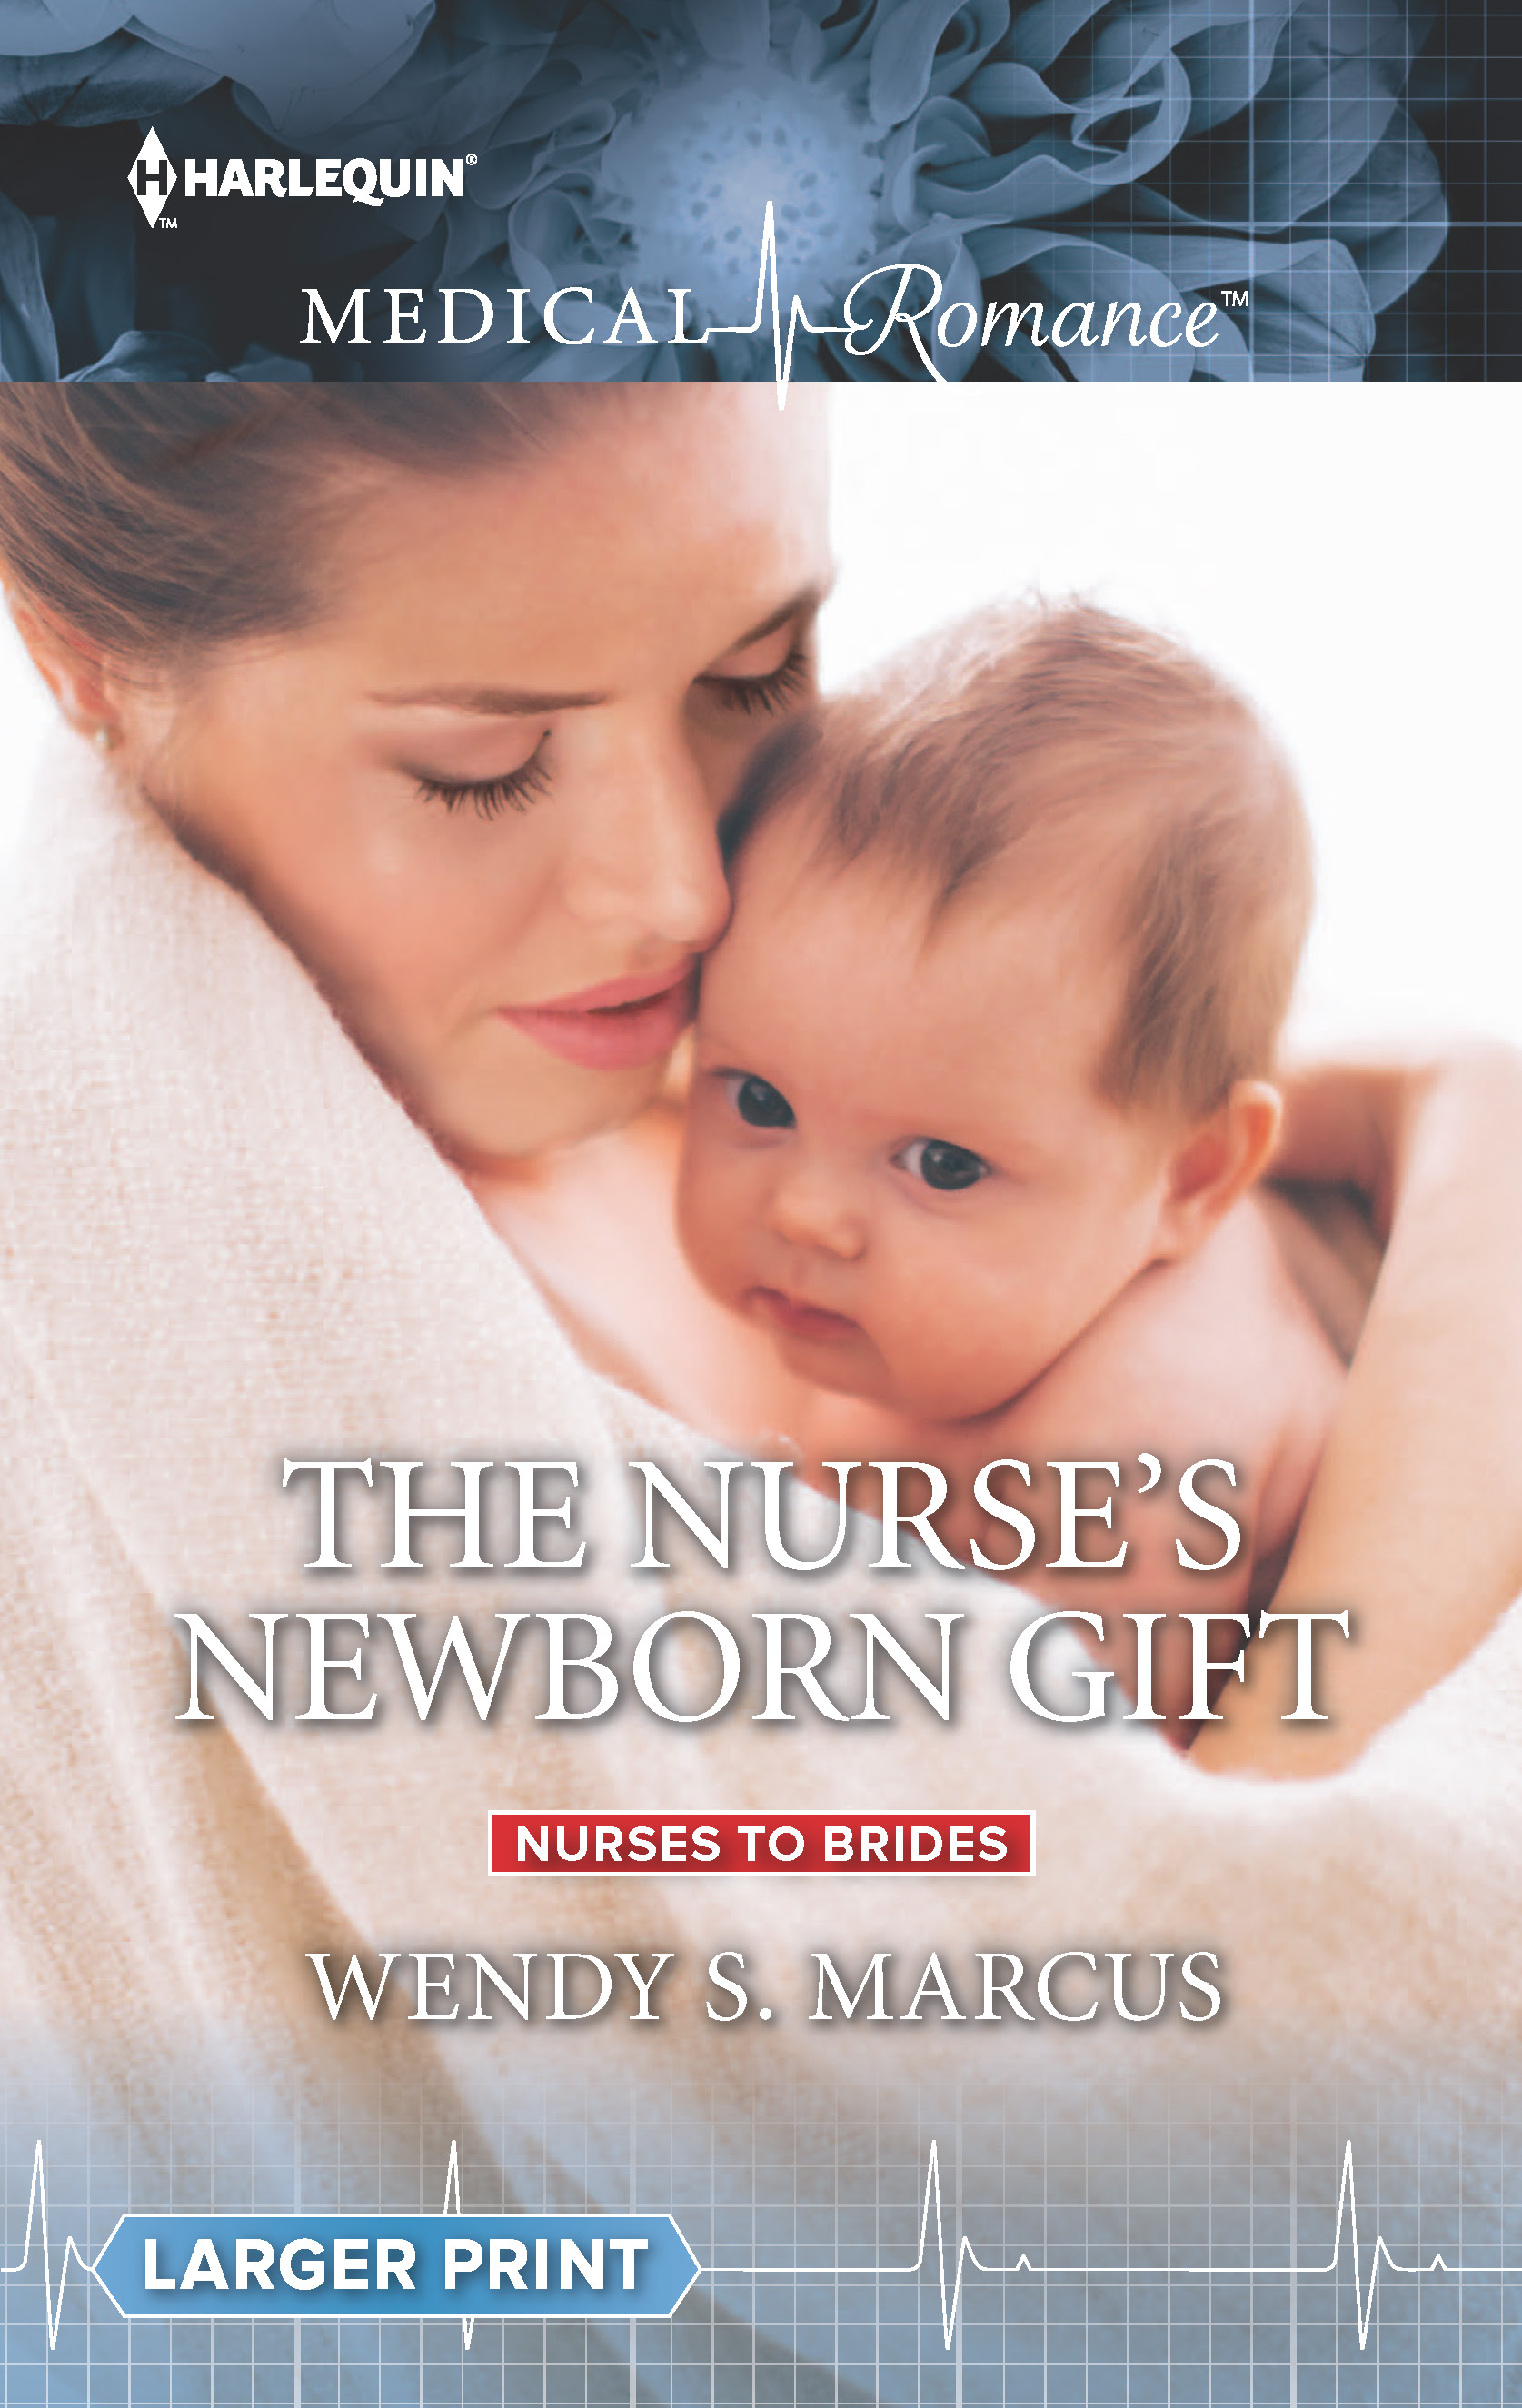 The Nurse's Newborn Gift, by Wendy S. Marcus